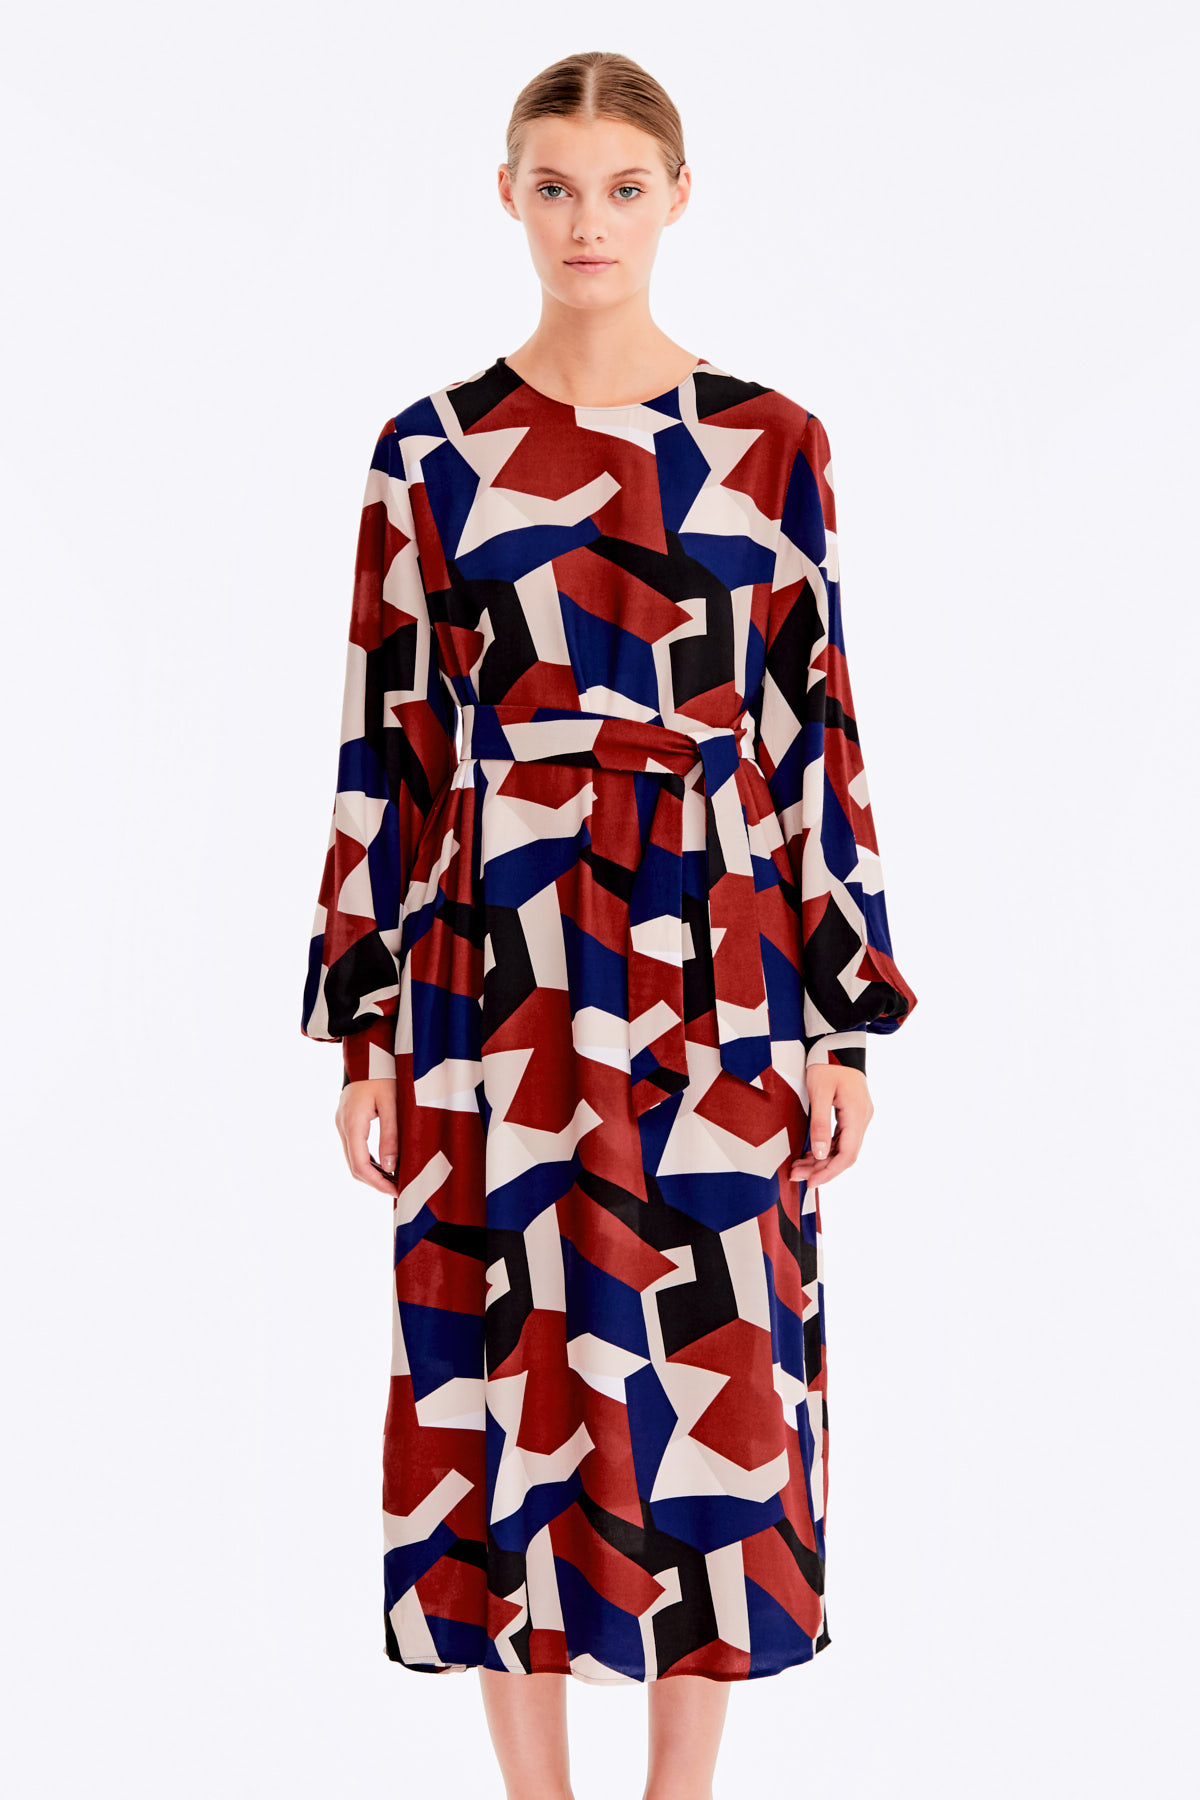 Free midi dress with variegated geometric print ¶¶, photo 2